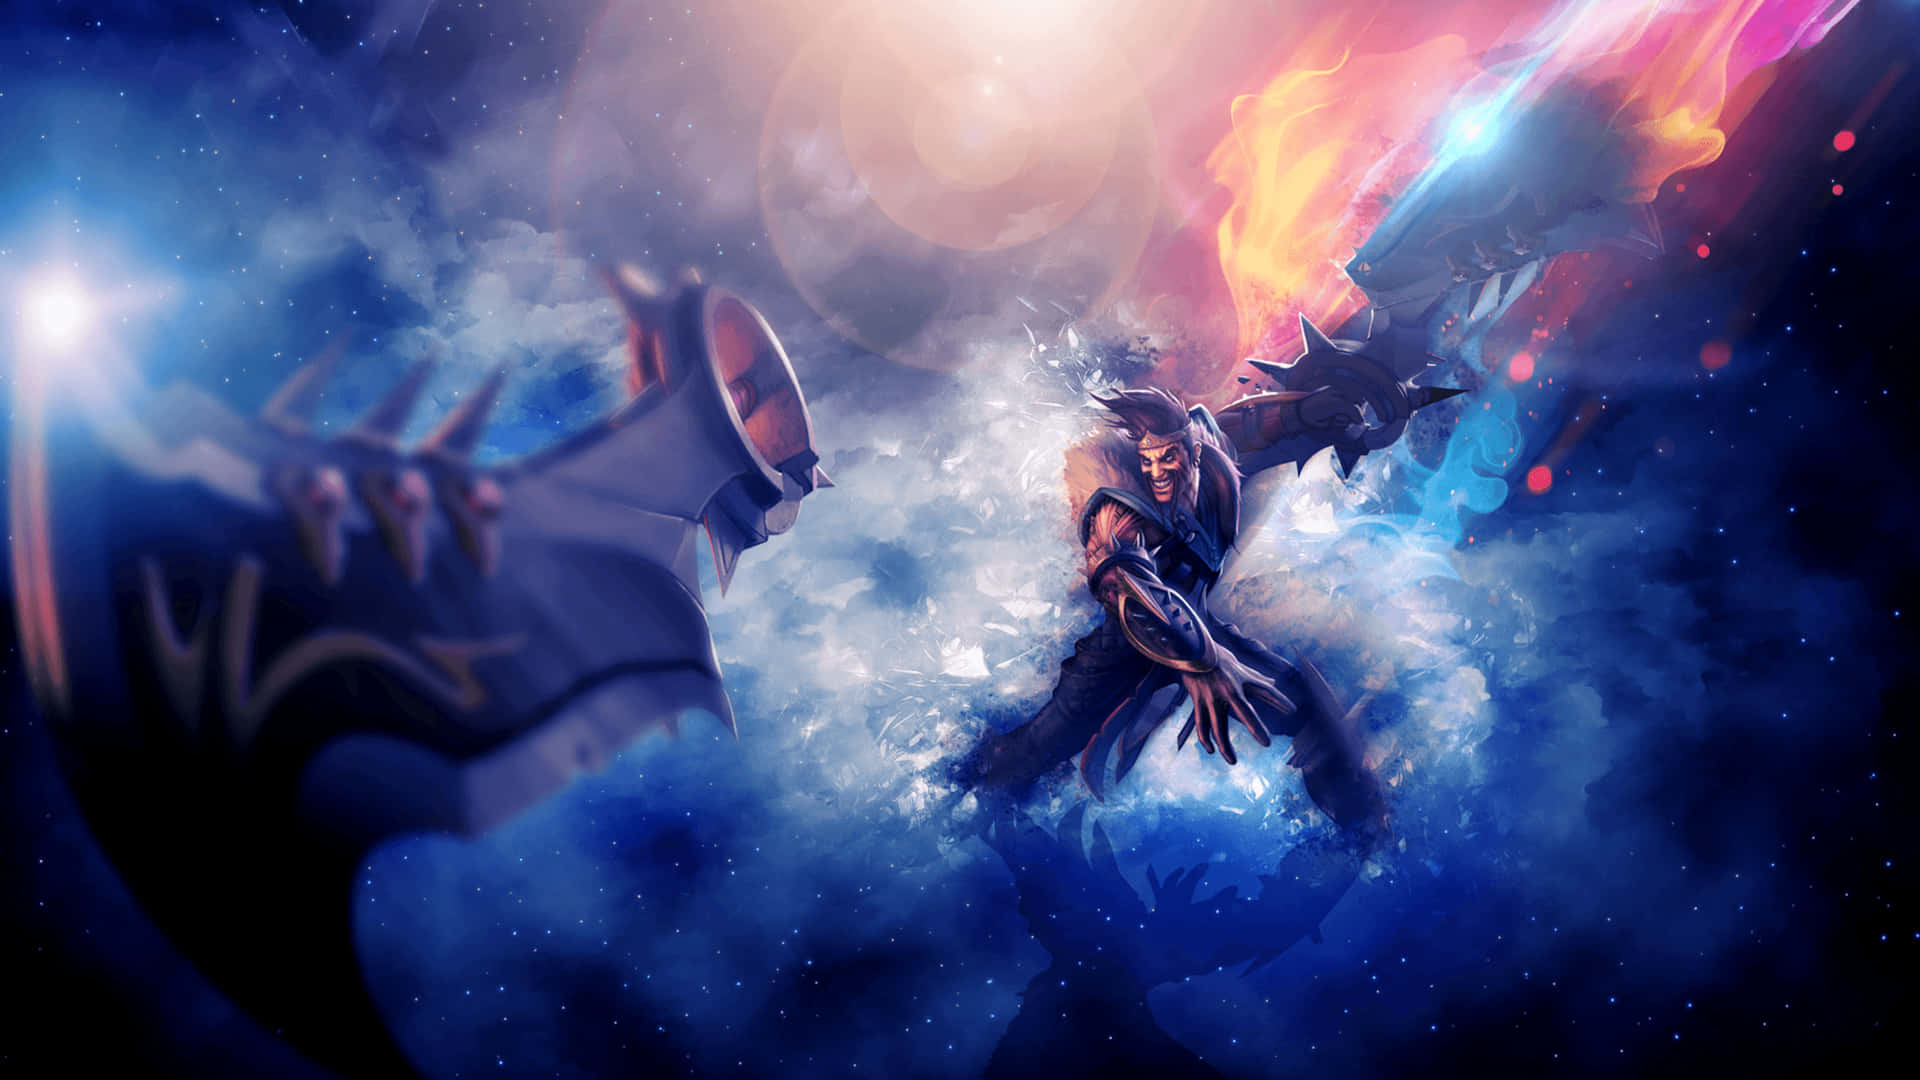 Guardaquesta Epica Immagine Di Sfondo In 4k Di League Of Legends